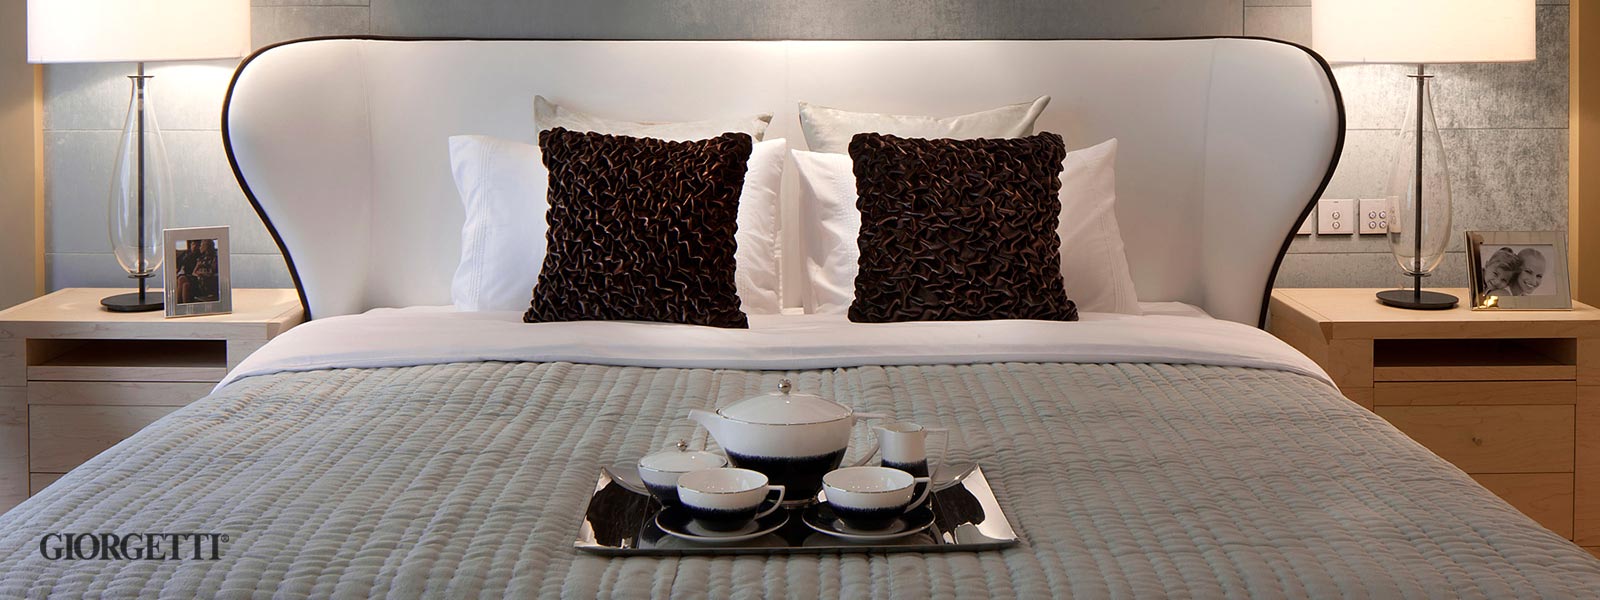 Giorgetti modern Italian bed set